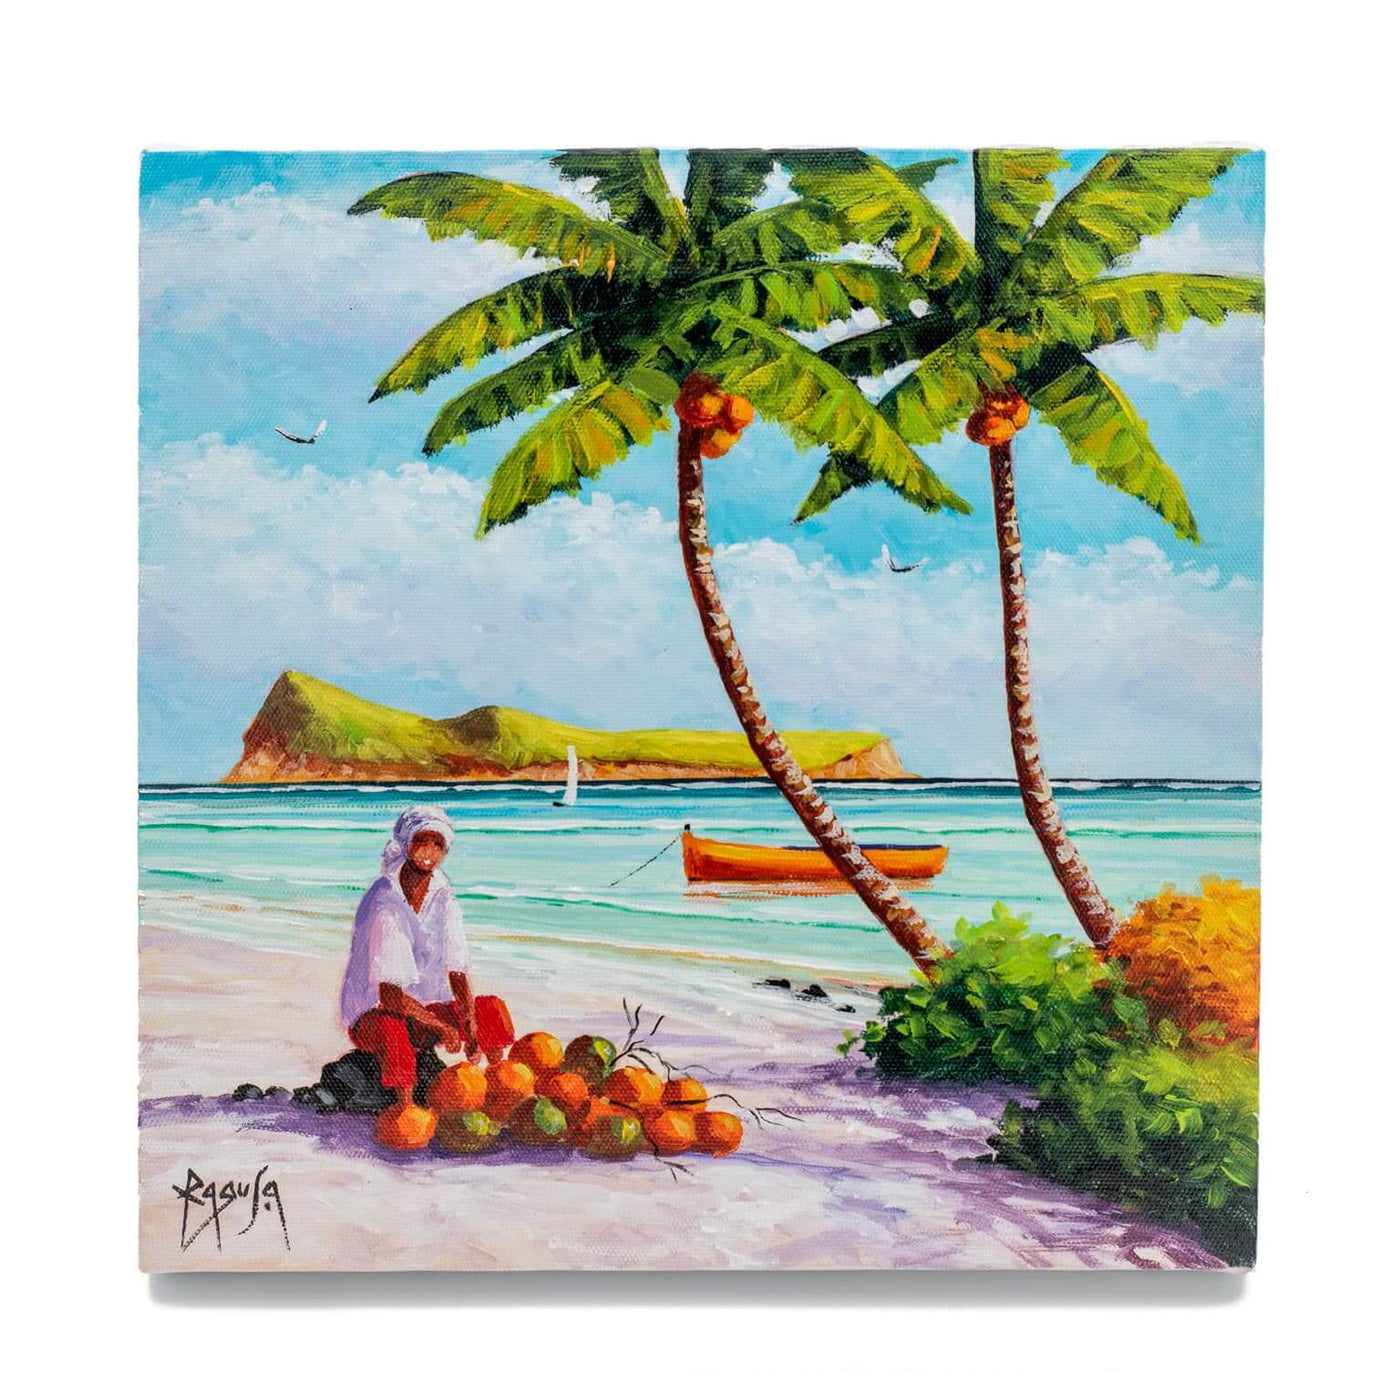 Mauritius-Authentic-HandMade-Painting-Pino Ragusa, "Vendeur de coco"-DodoMarket